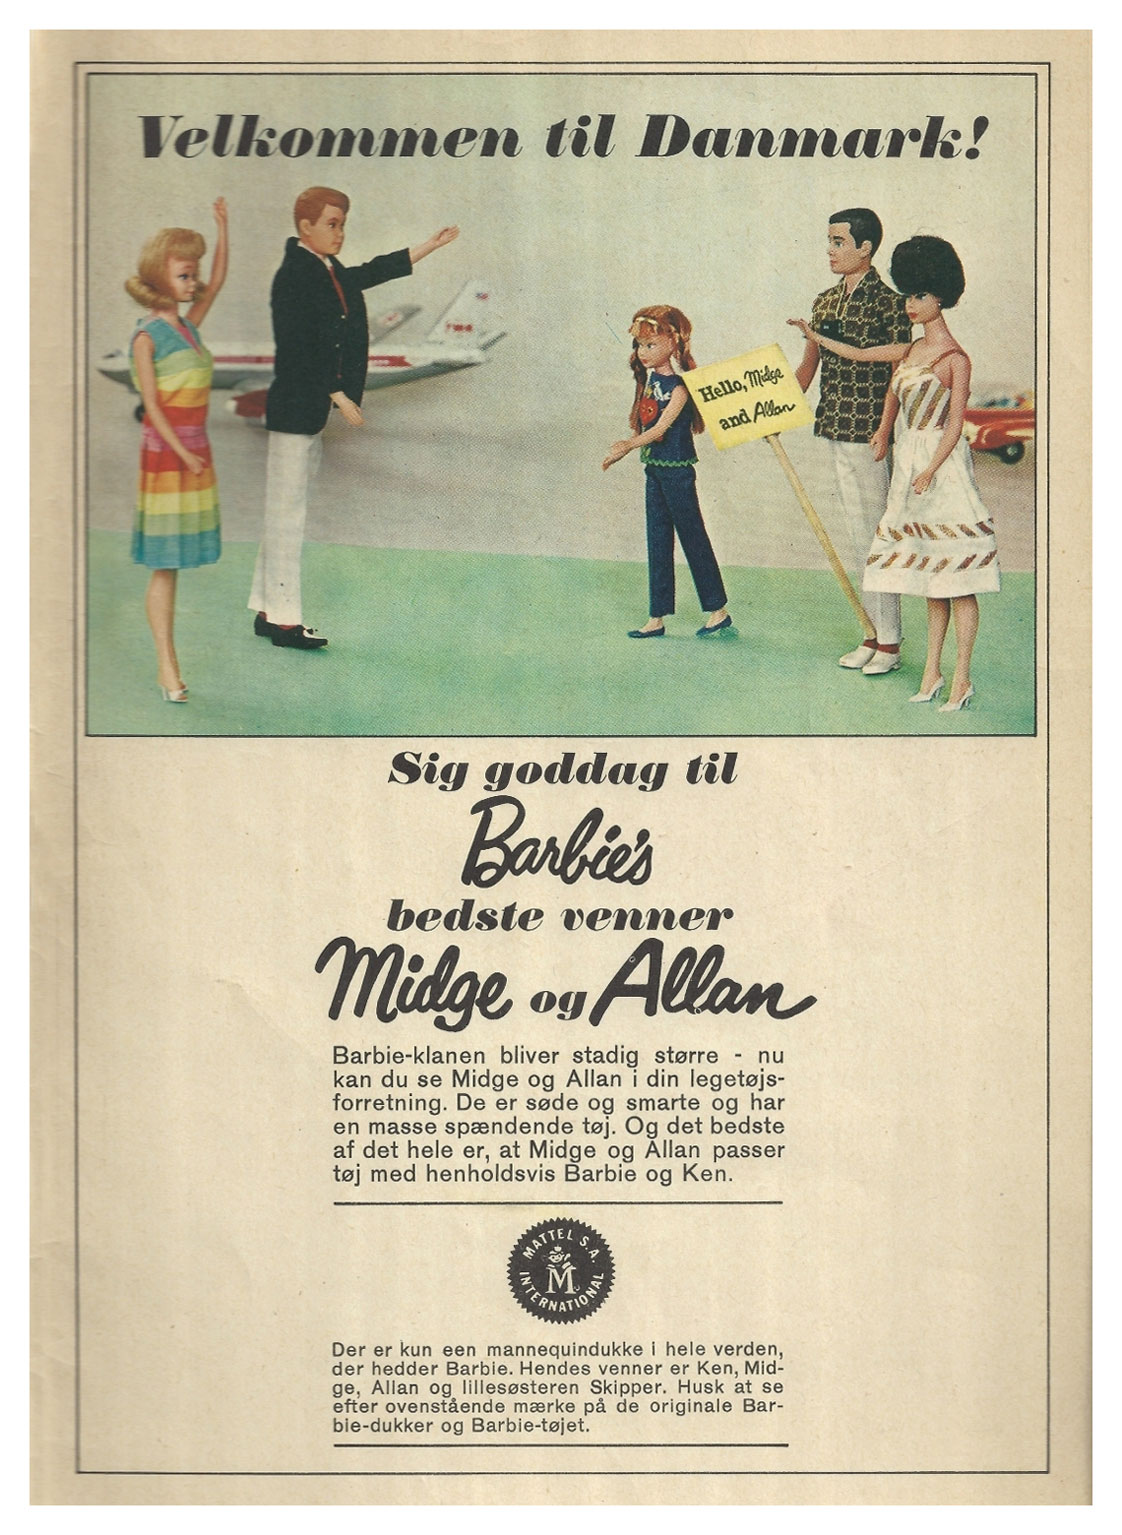 1966 Danish advertisement for Allan